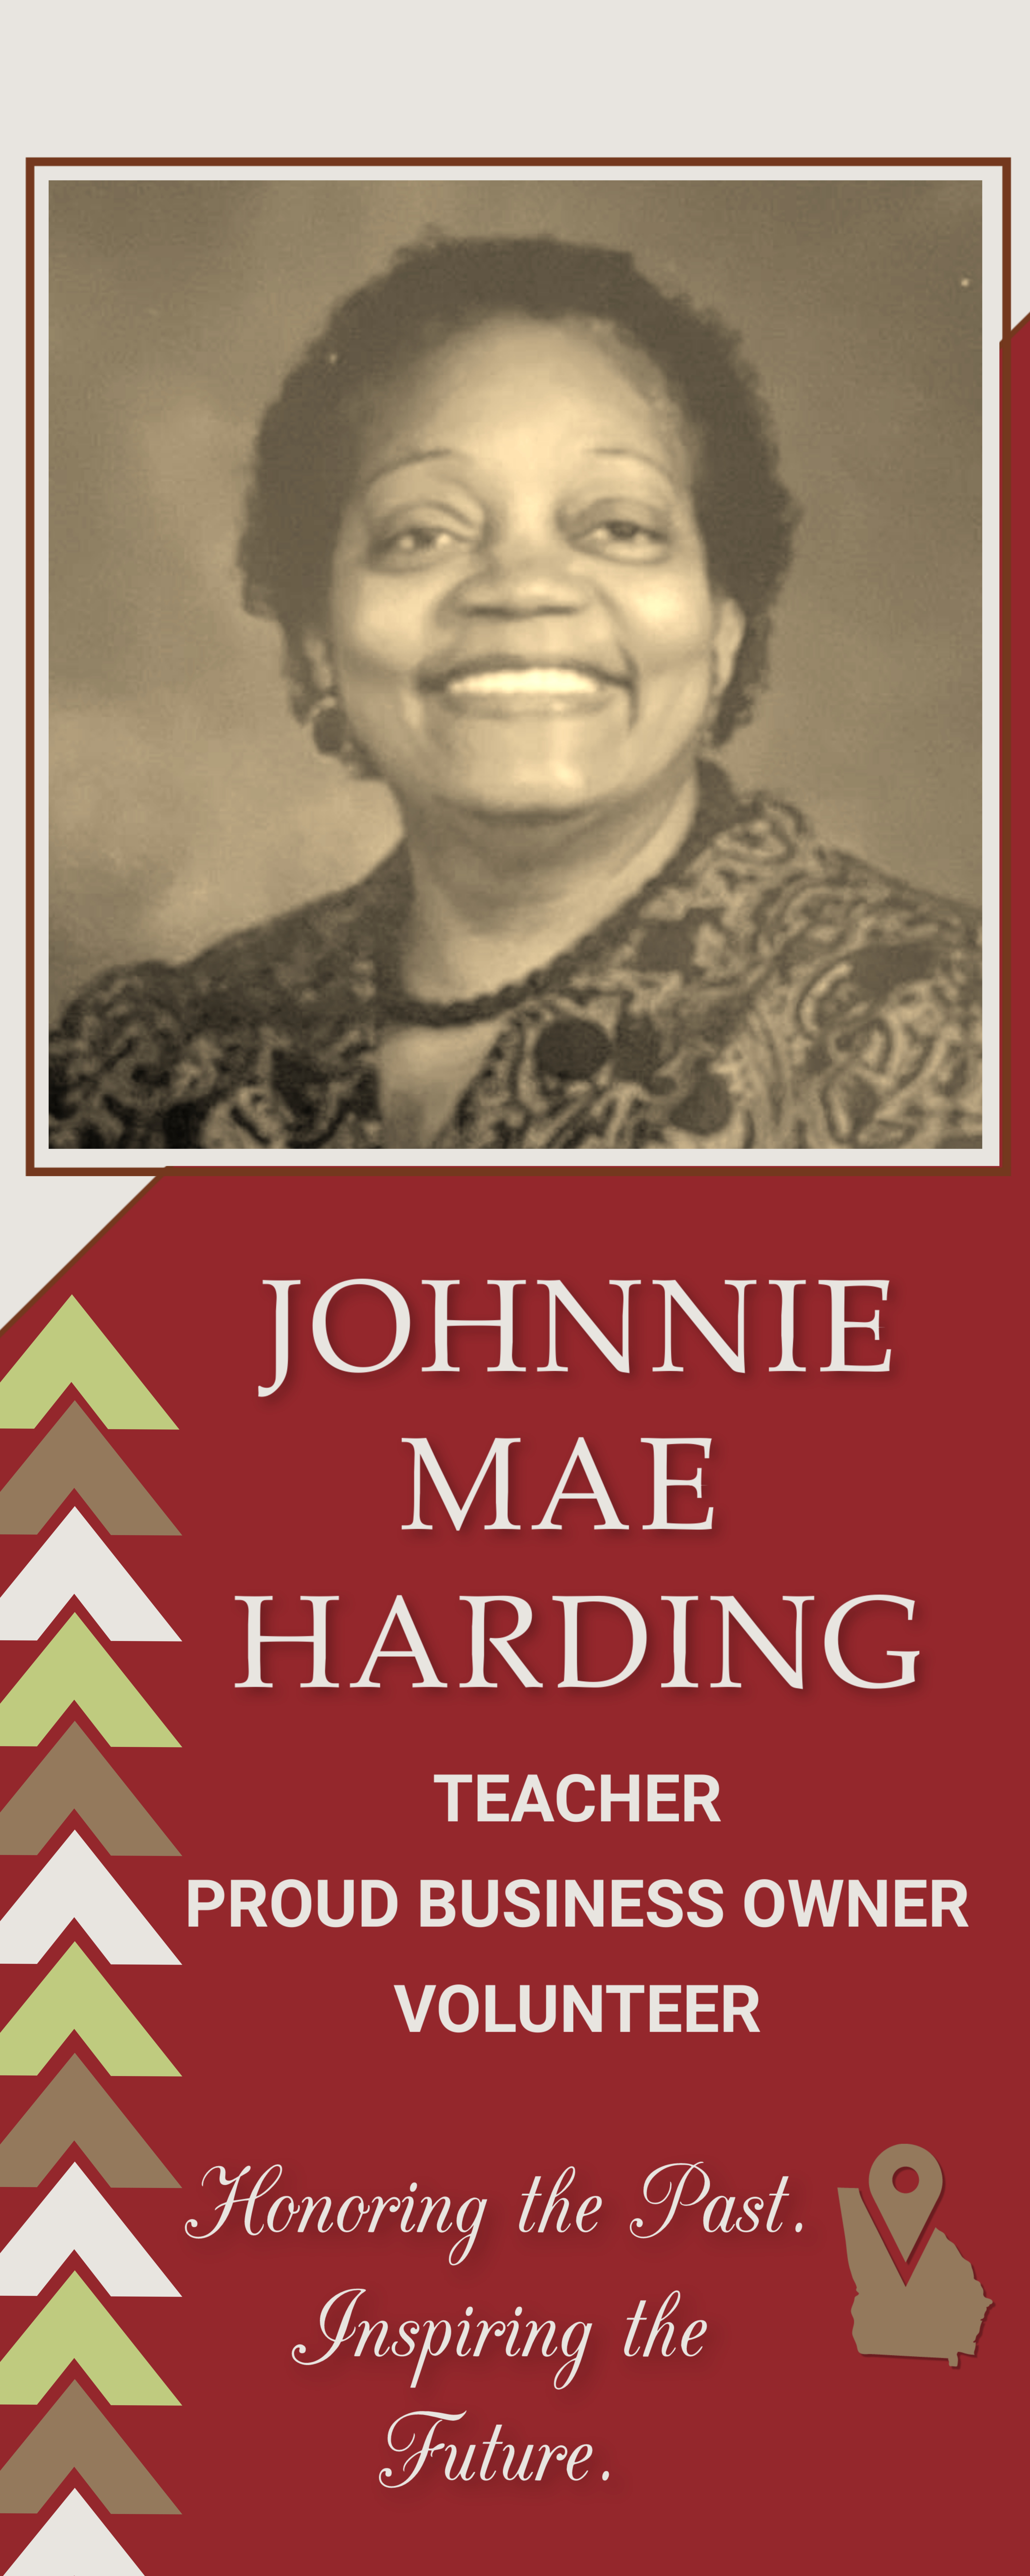 Johnnie Mae Hardin